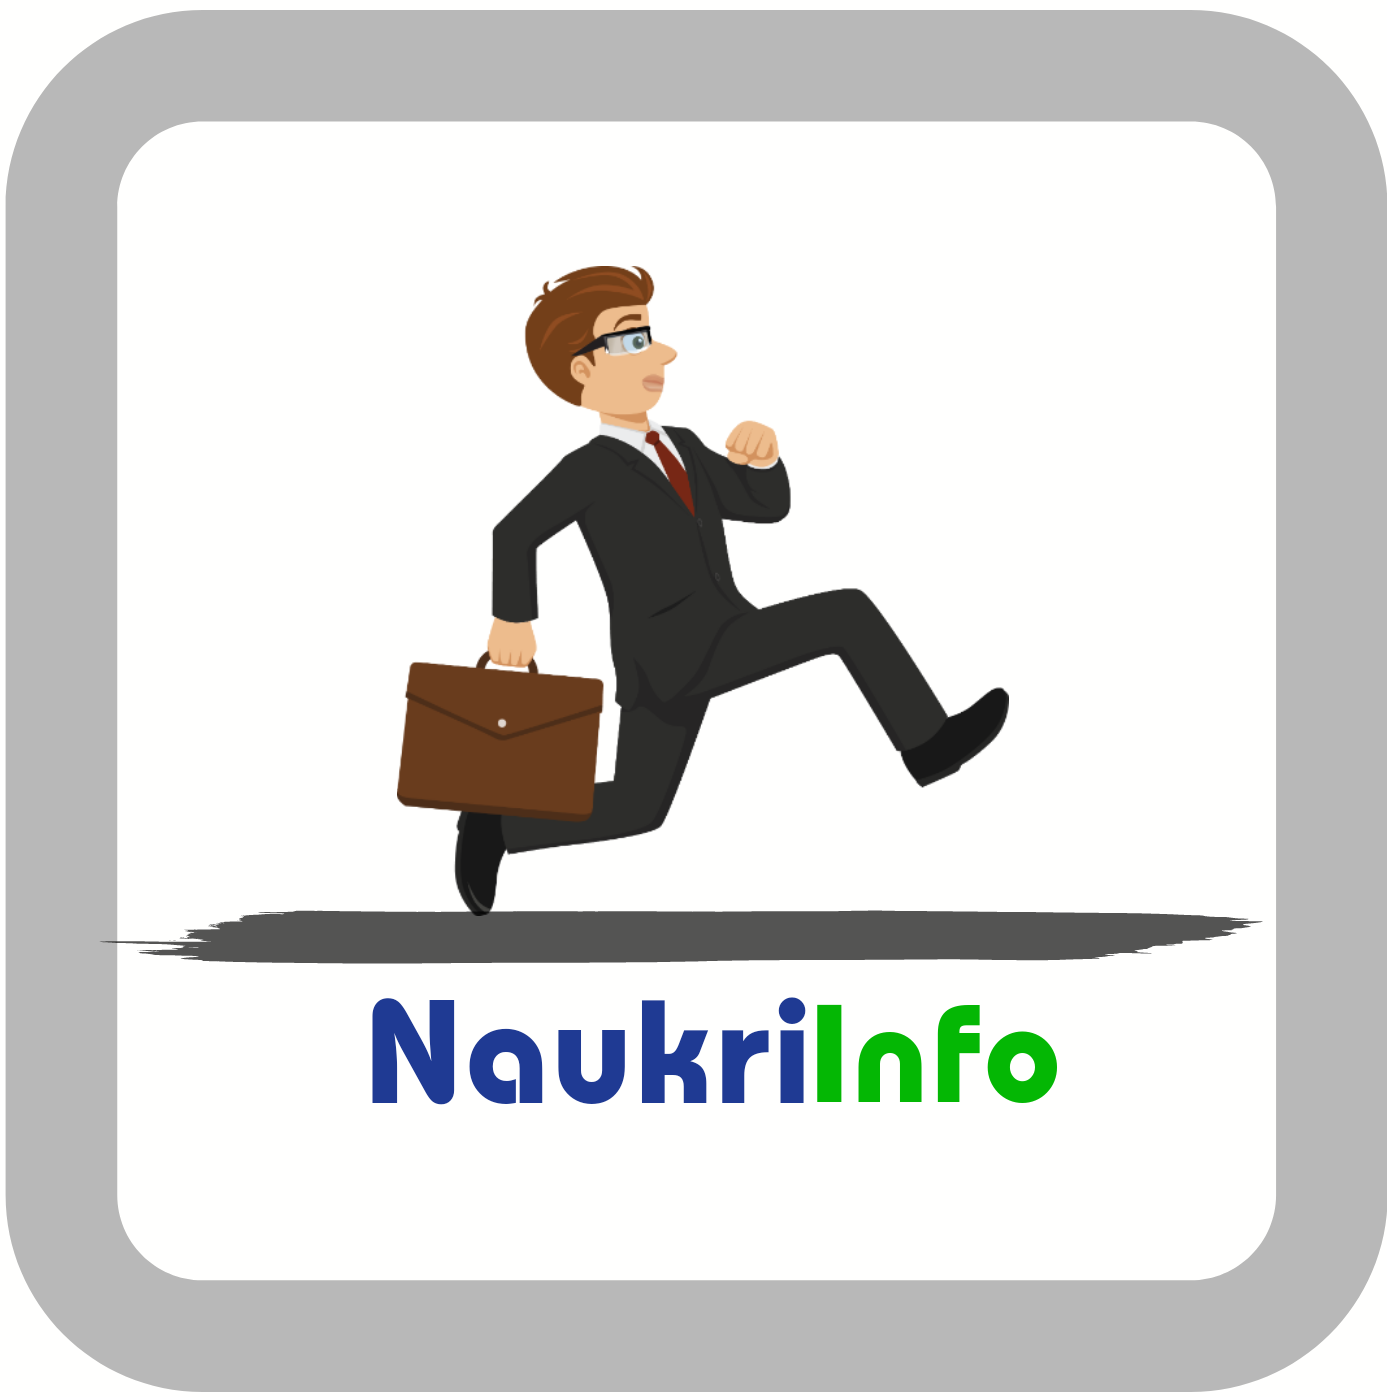 Naukri Info Share Business Card